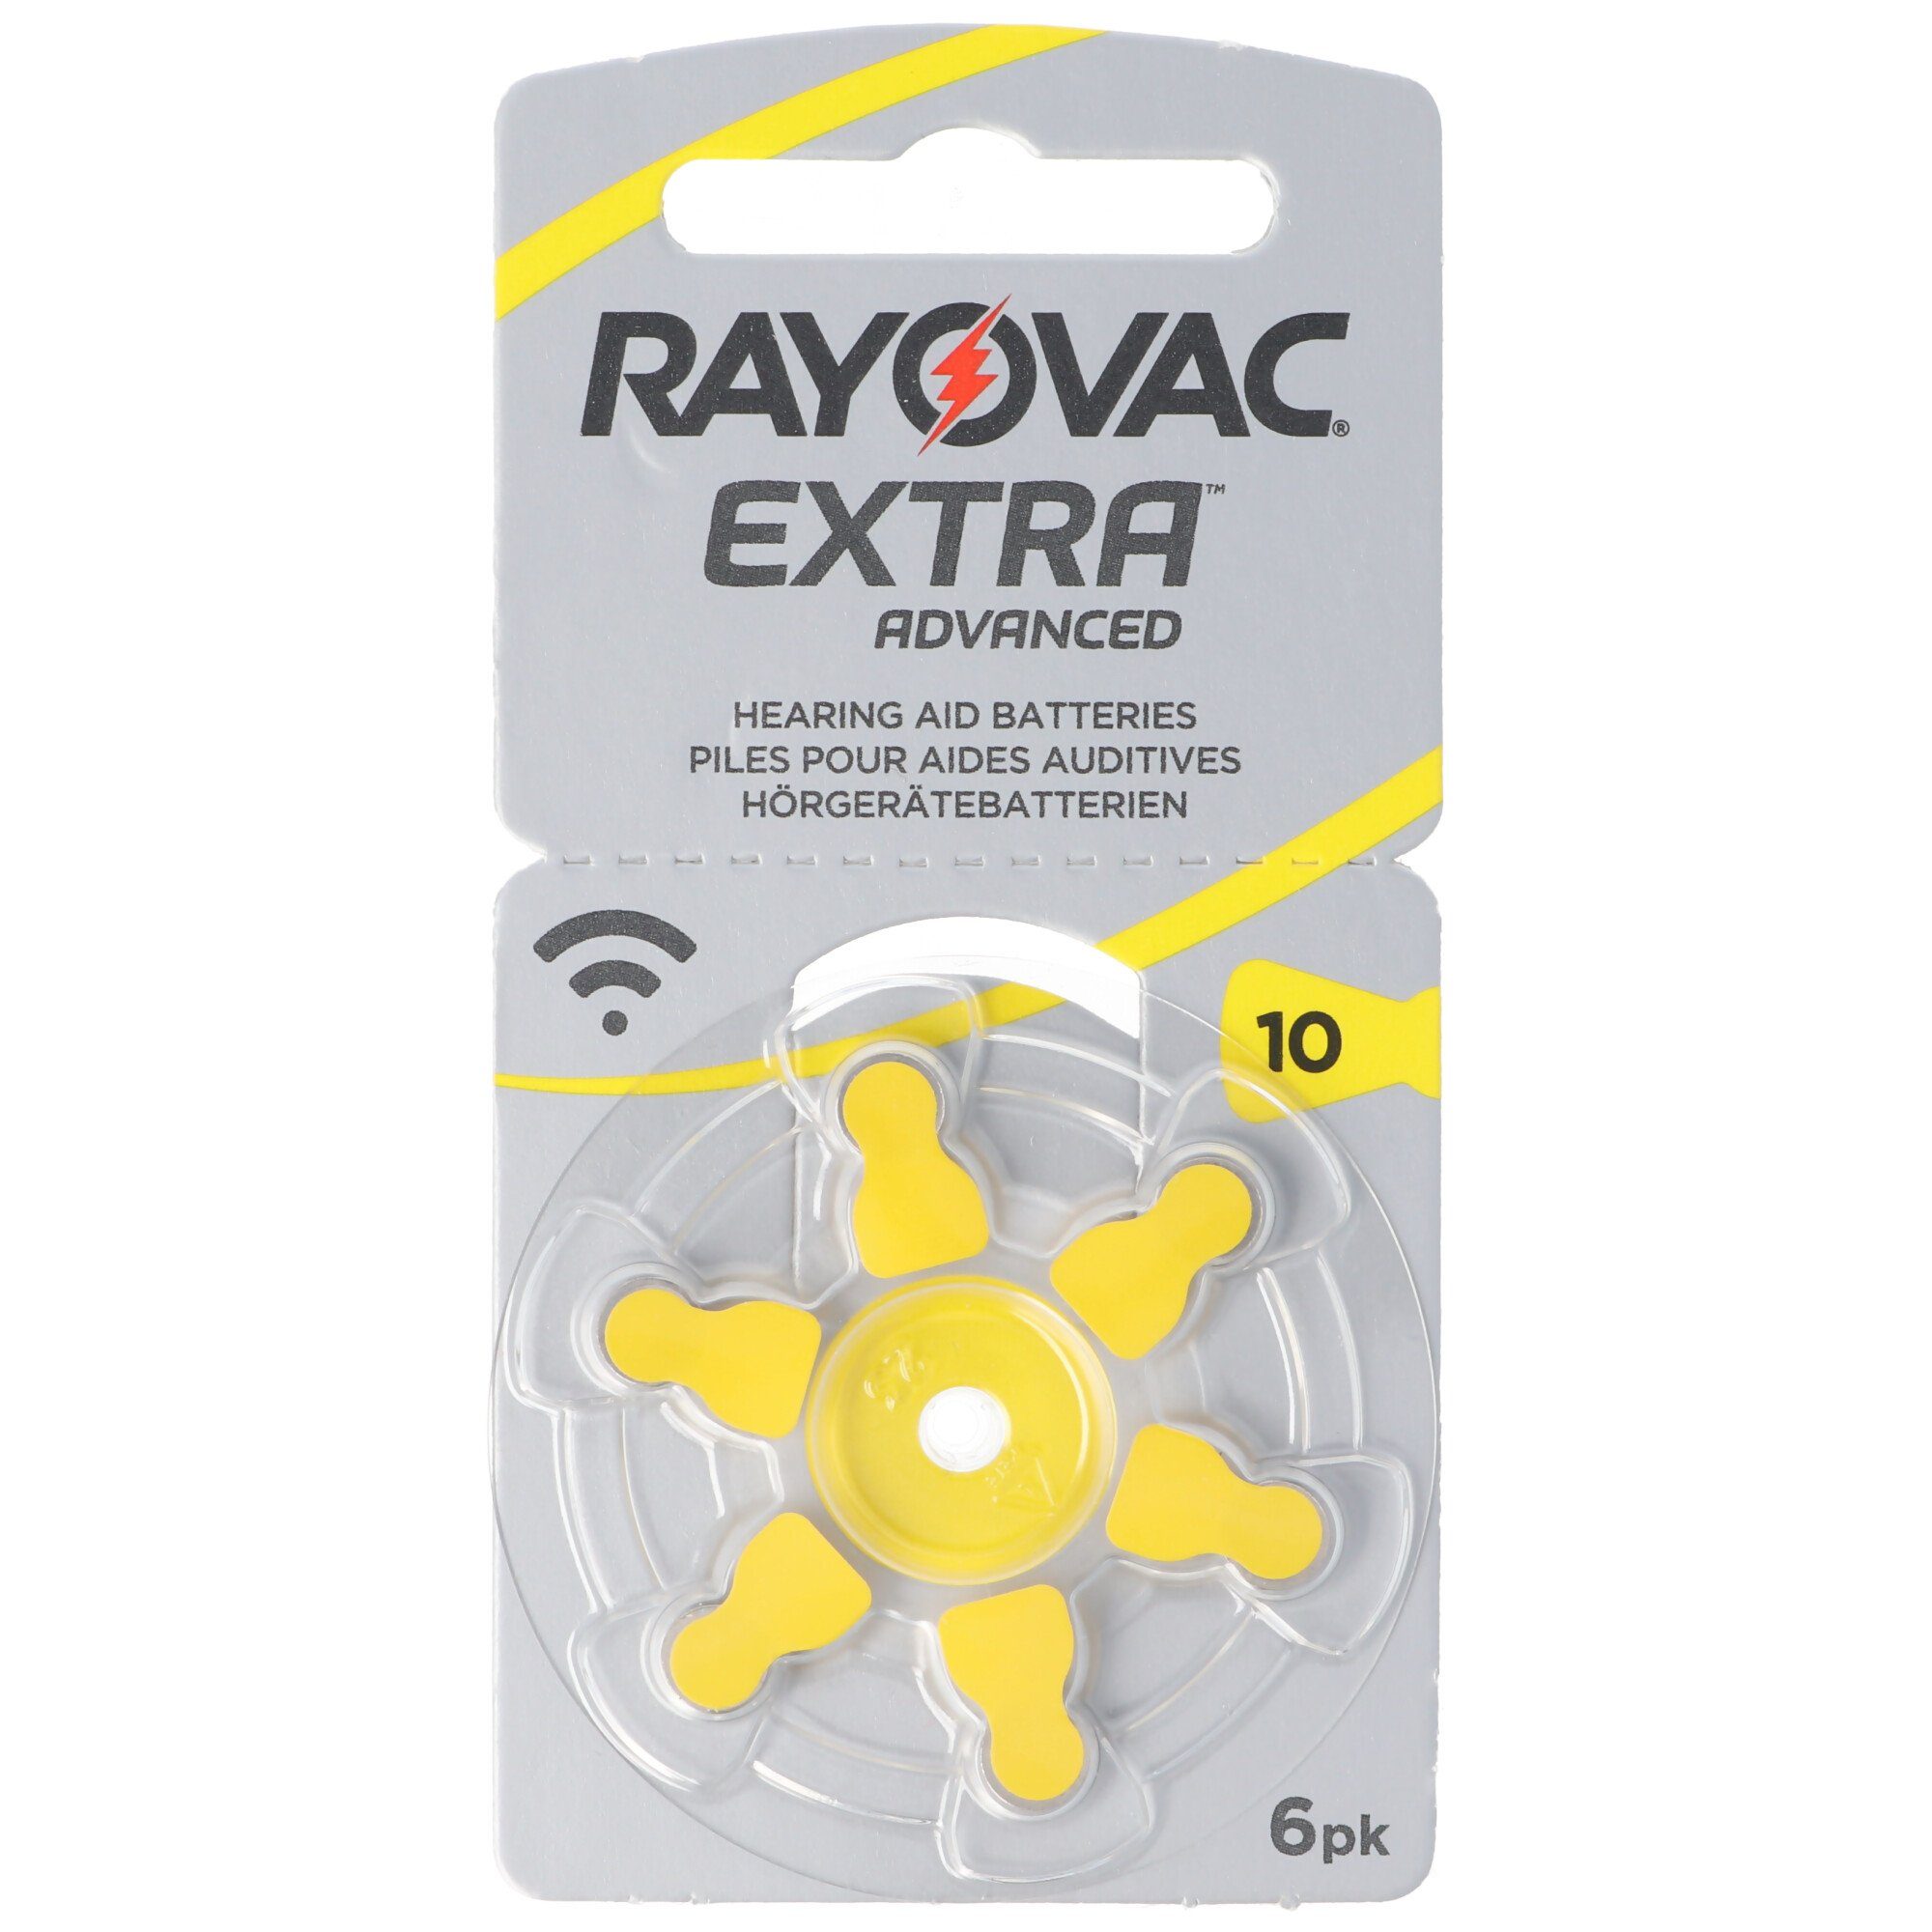 RAYOVAC Rayovac Hörgerätebatterie H10MF Nr. 105mAh Extra Advanced, V) (1,4 Batterie, 10 PR70 6